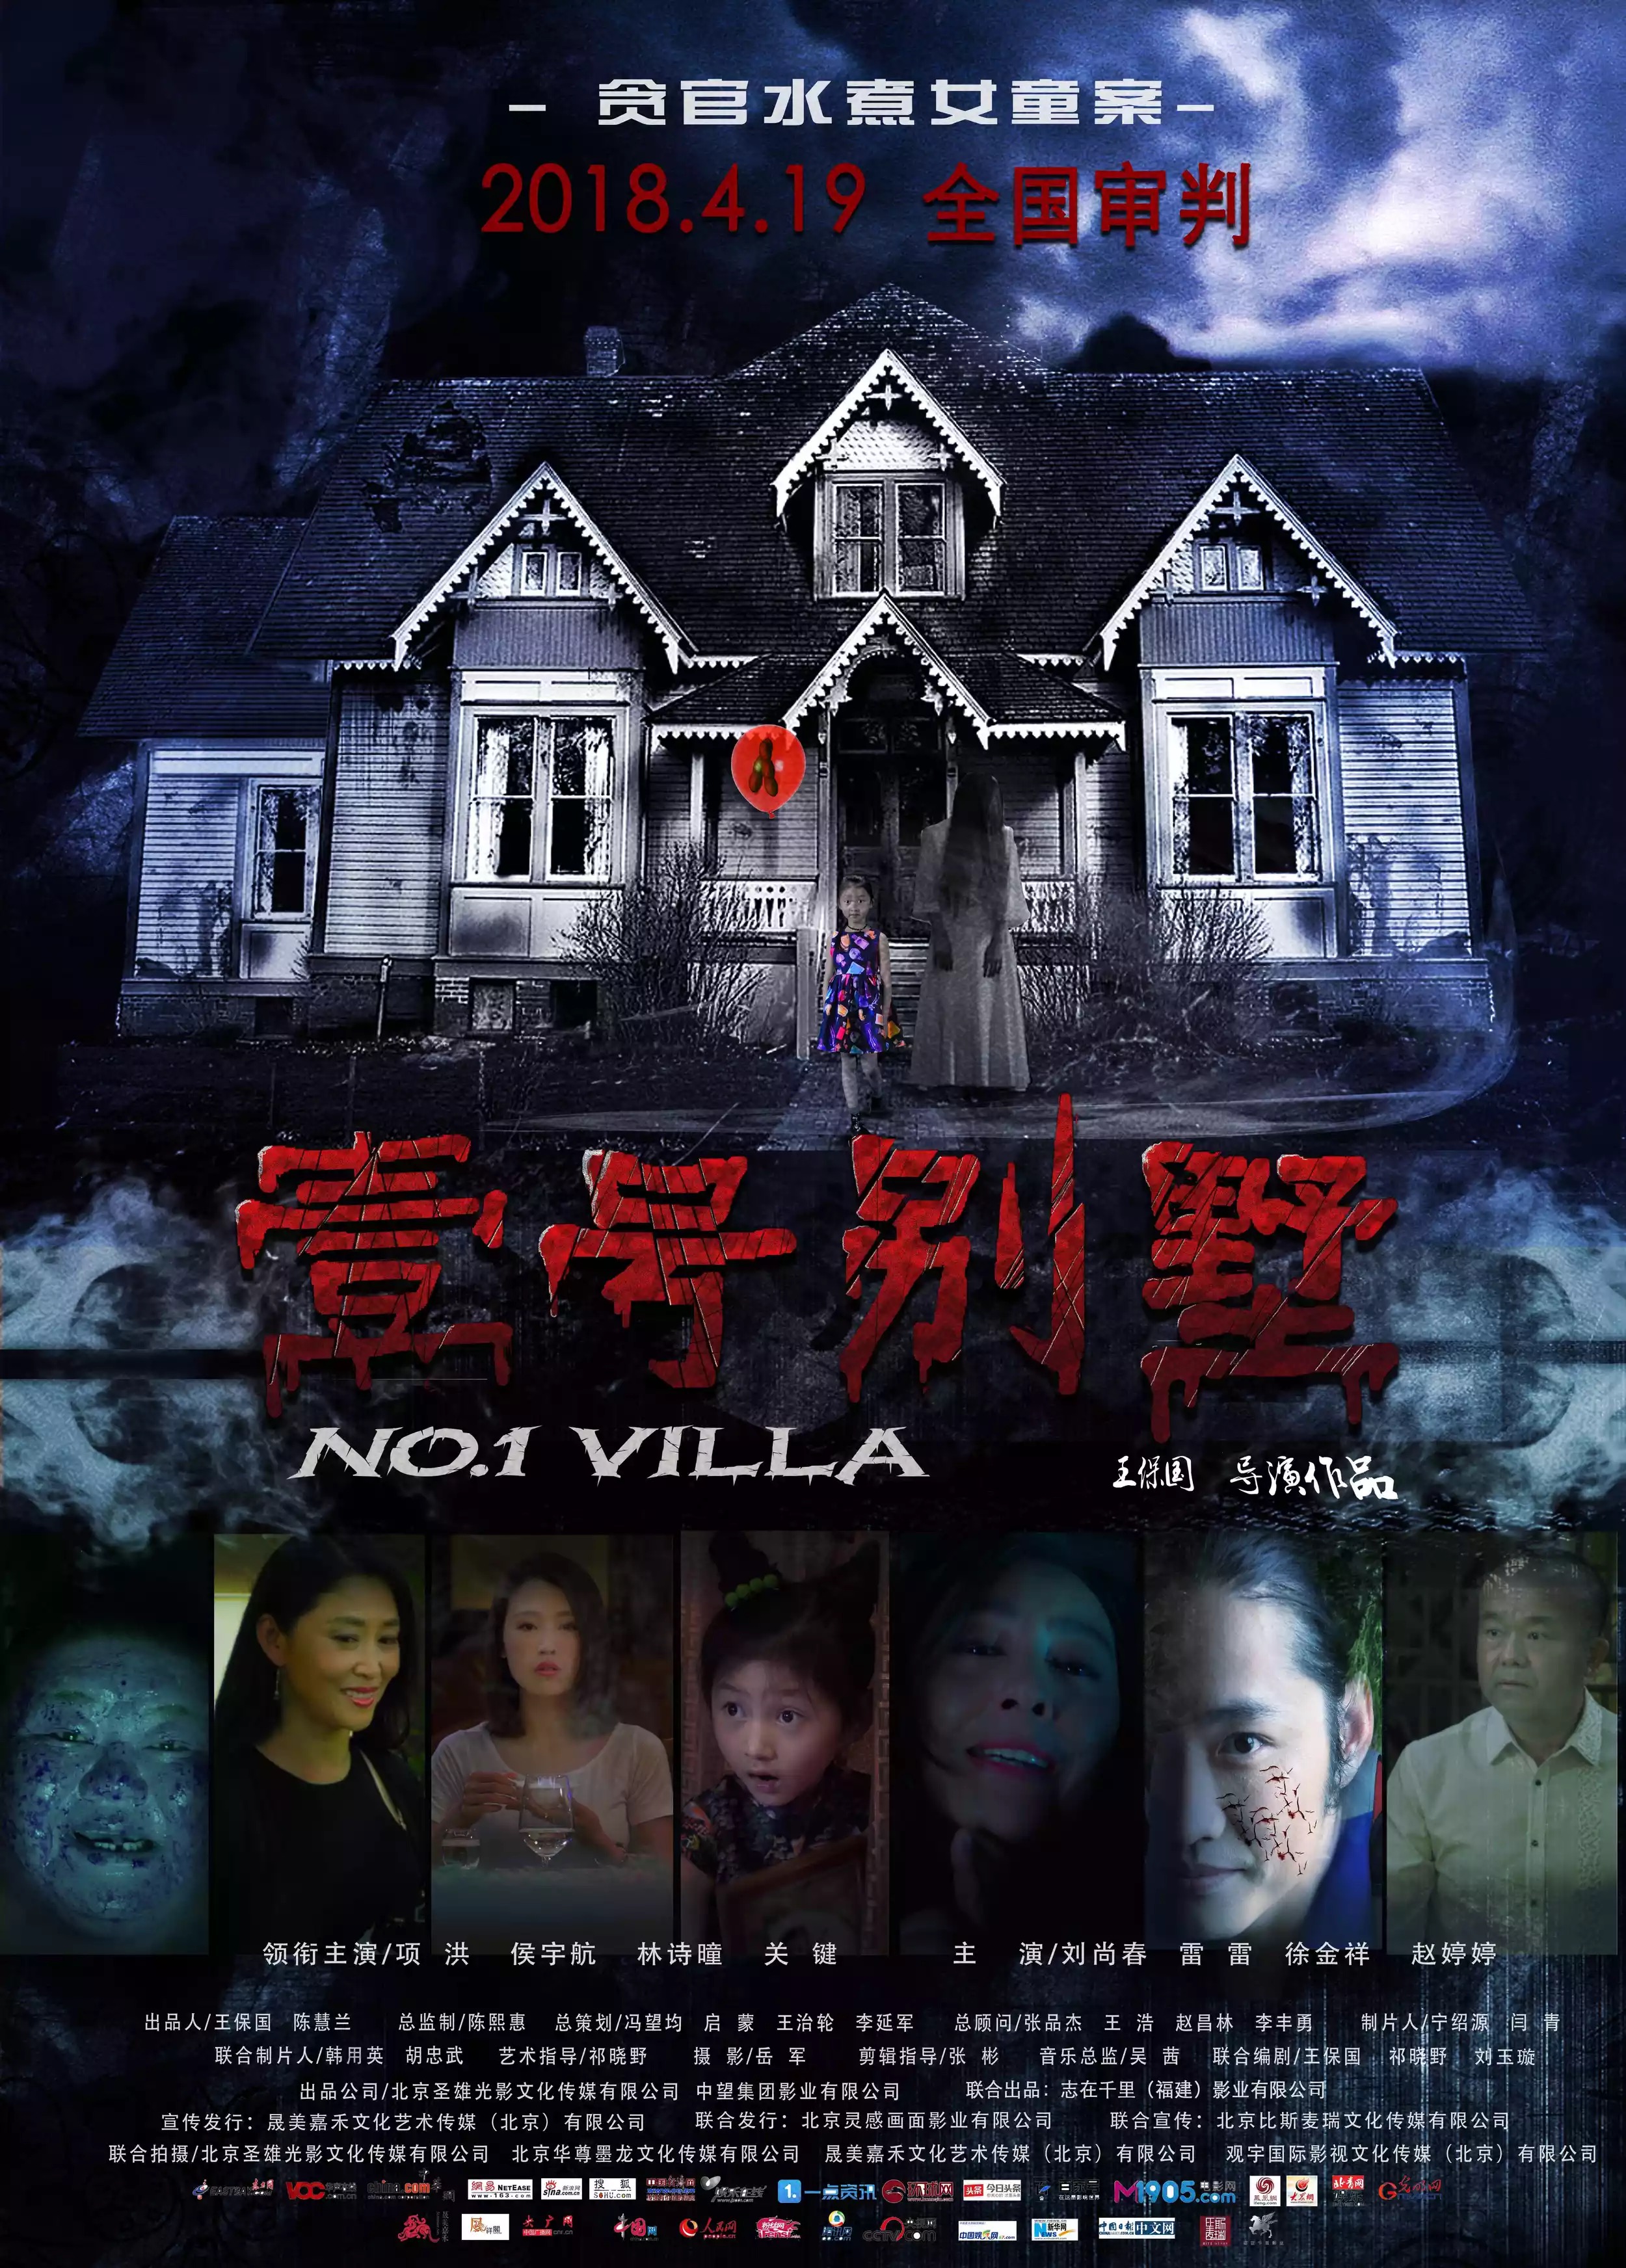 壹号别墅 - No.1 Villa